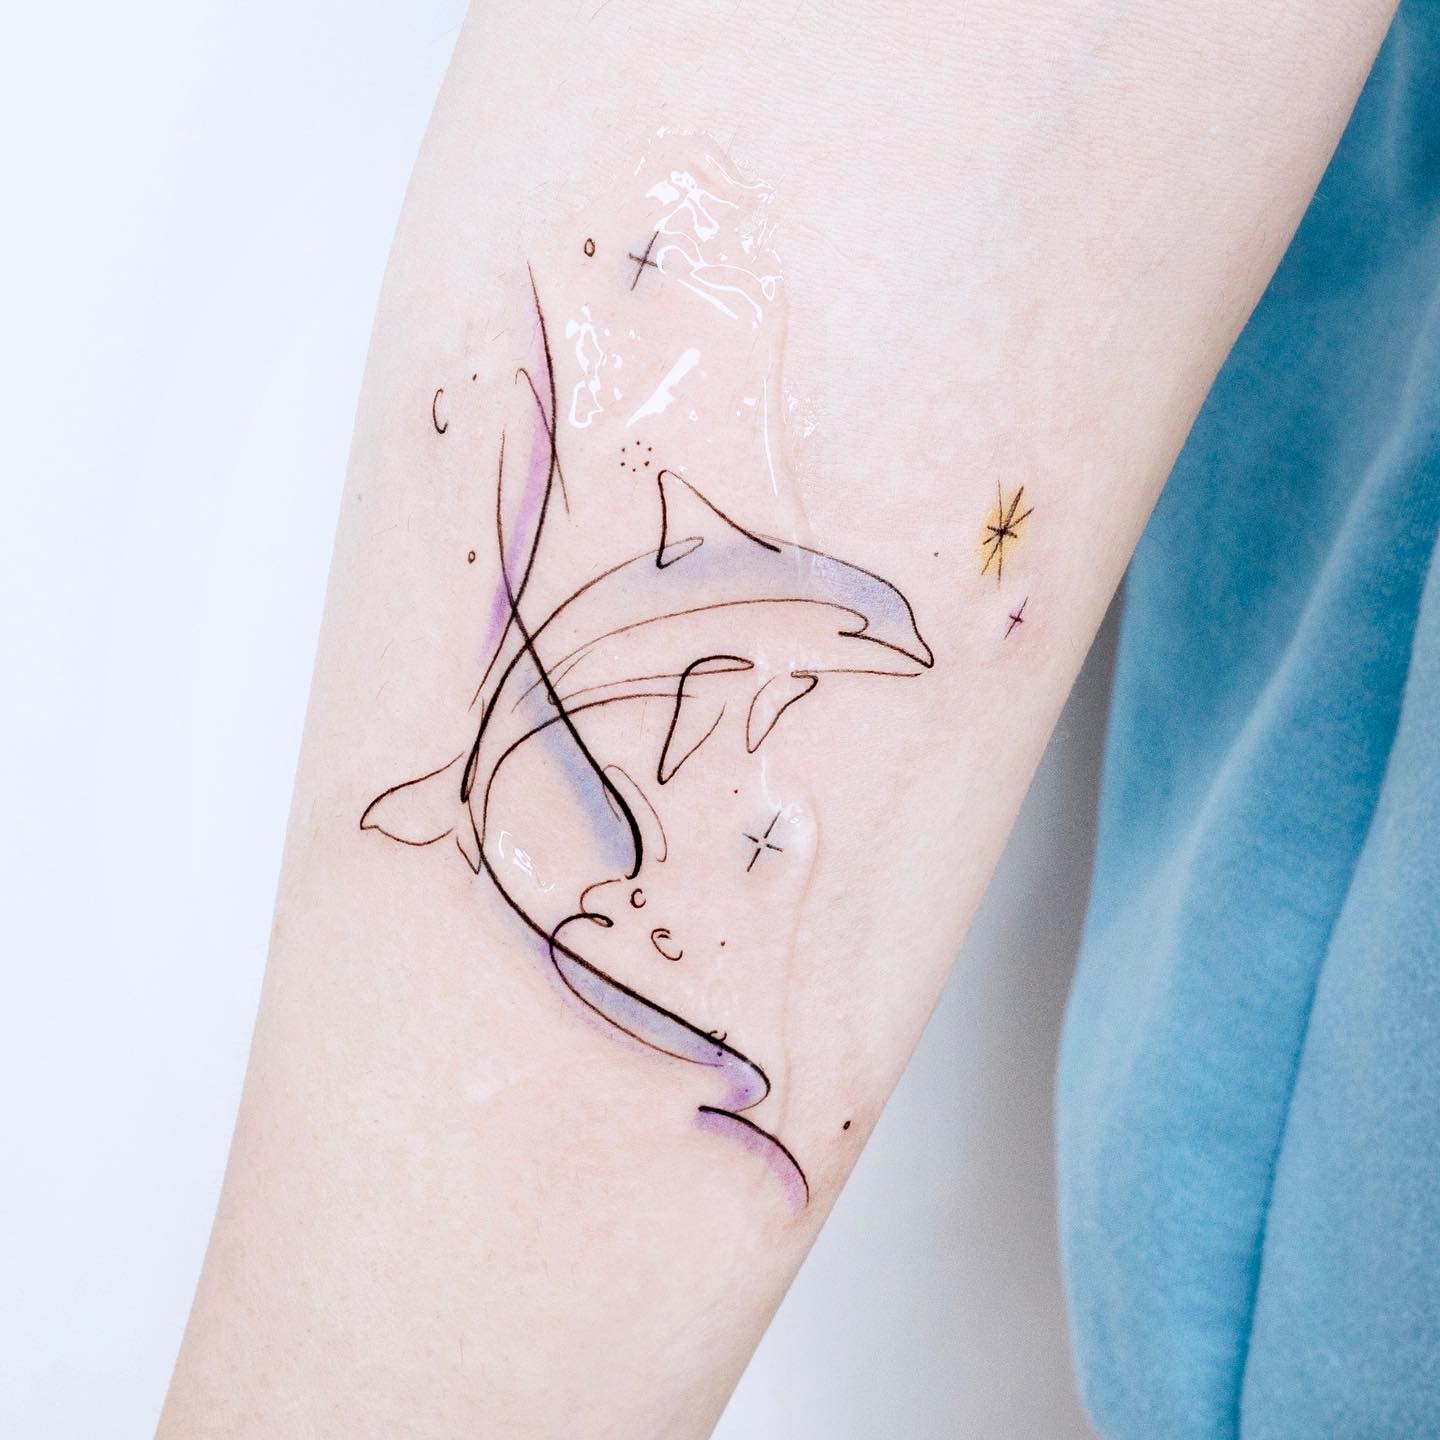 Dolphin tattoo on forearm by heim tattoo